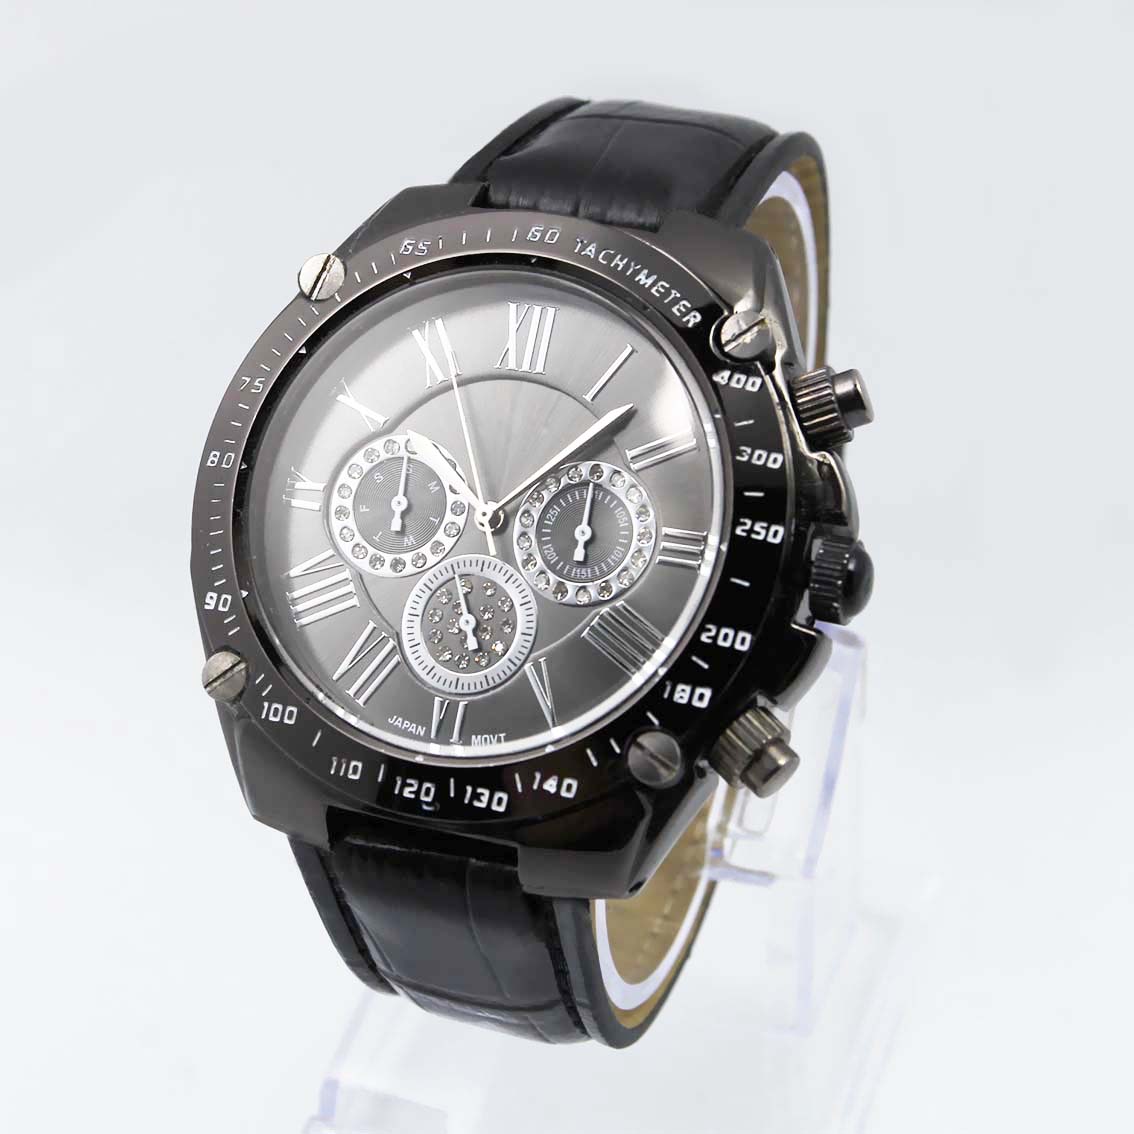 #02098Men's wristwatch quartz analog leather strap watch